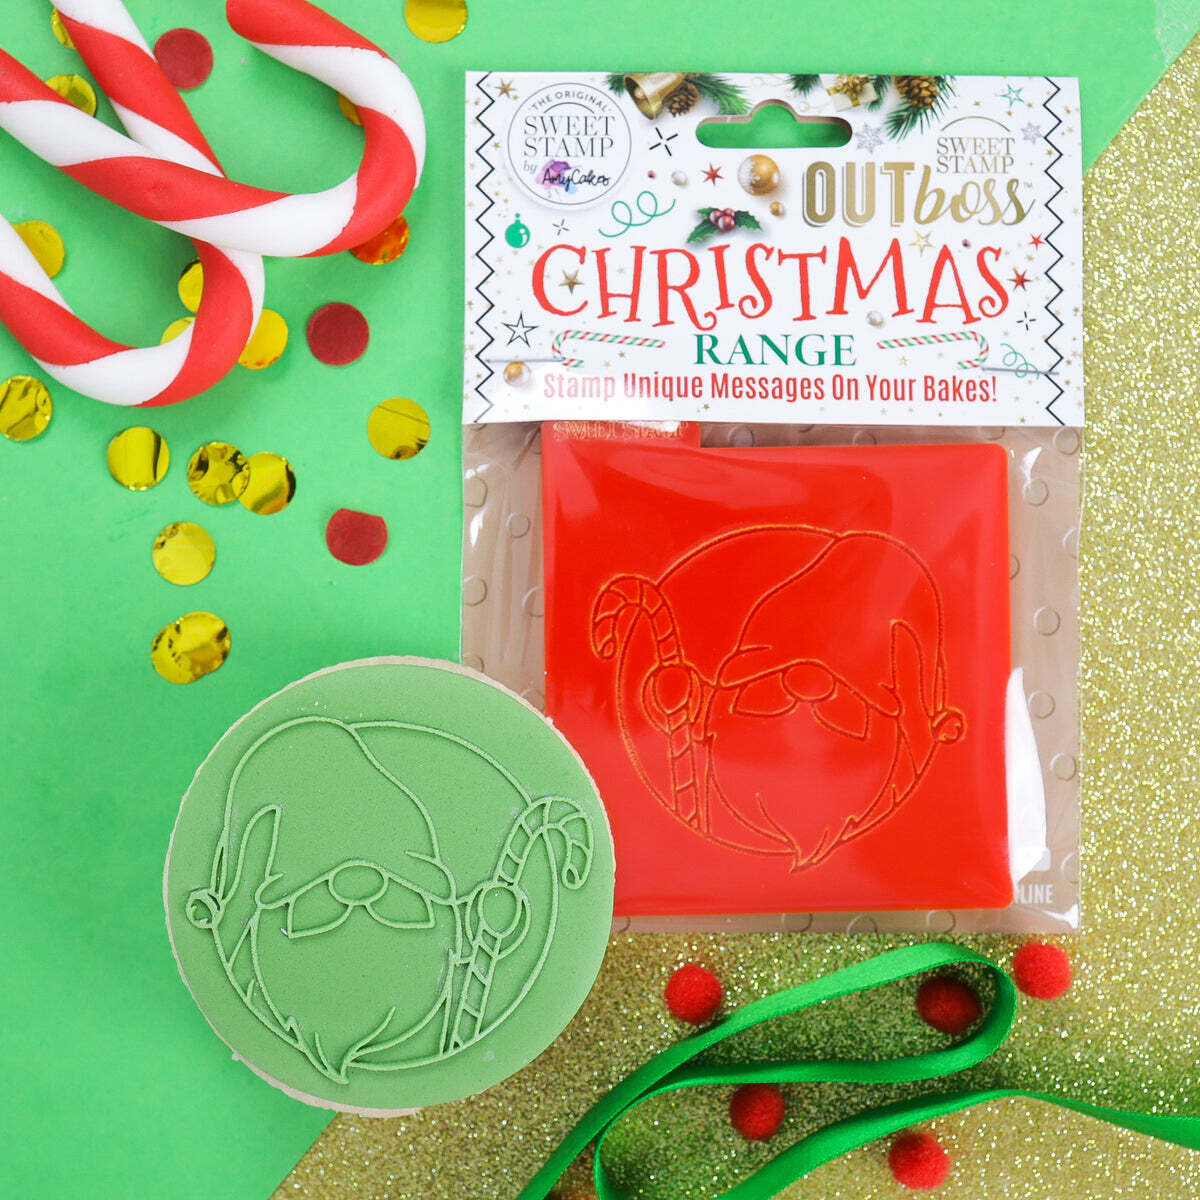 Sweet Stamp -OUTboss Christmas -CANDY CANE GNOME --Χριστουγεννιάτικη Σφραγίδα Νάνος με Γλειφιτζούρι